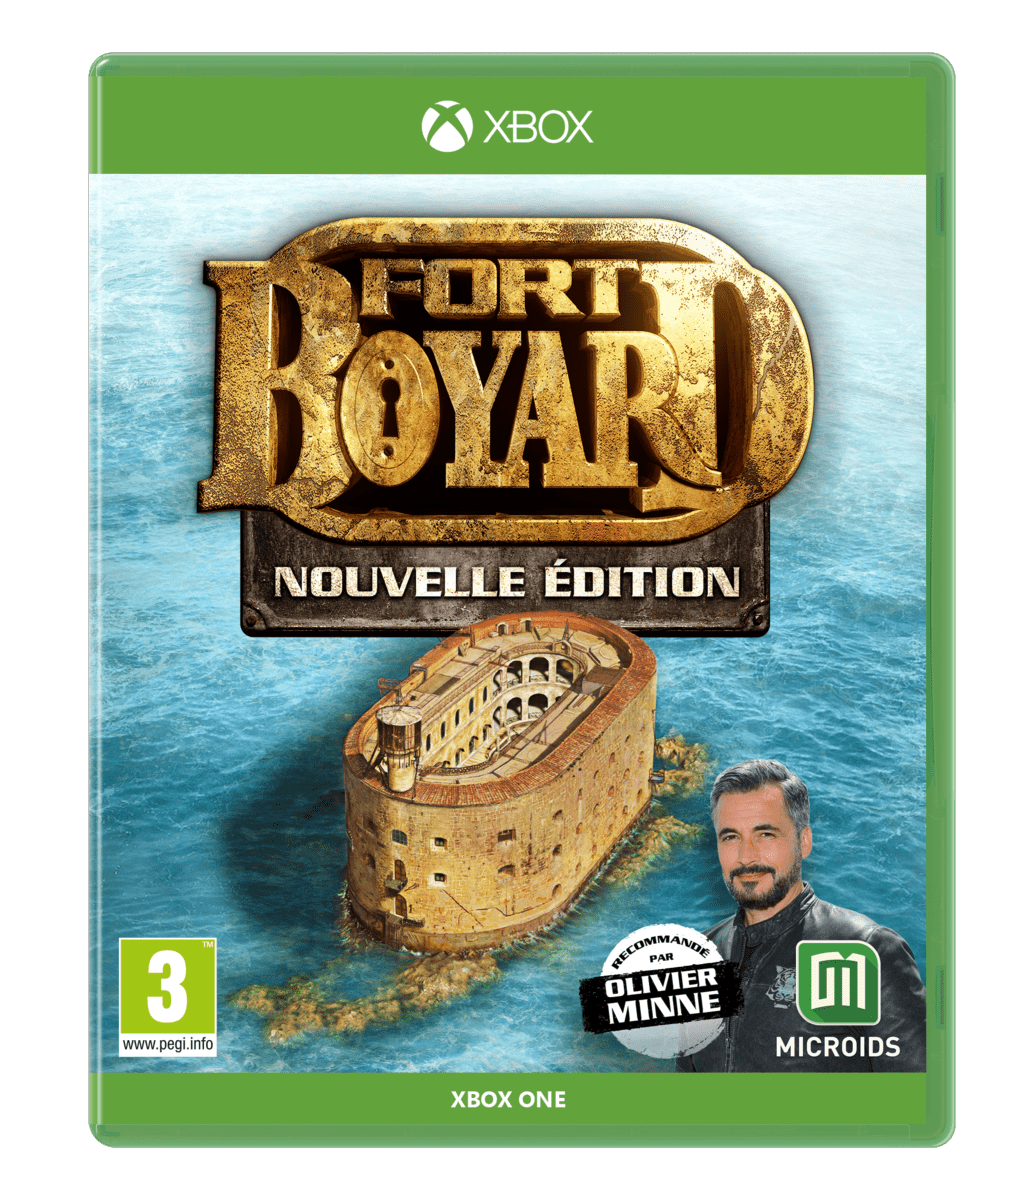 Fort Boyard Nouvelle Edition Xbox One